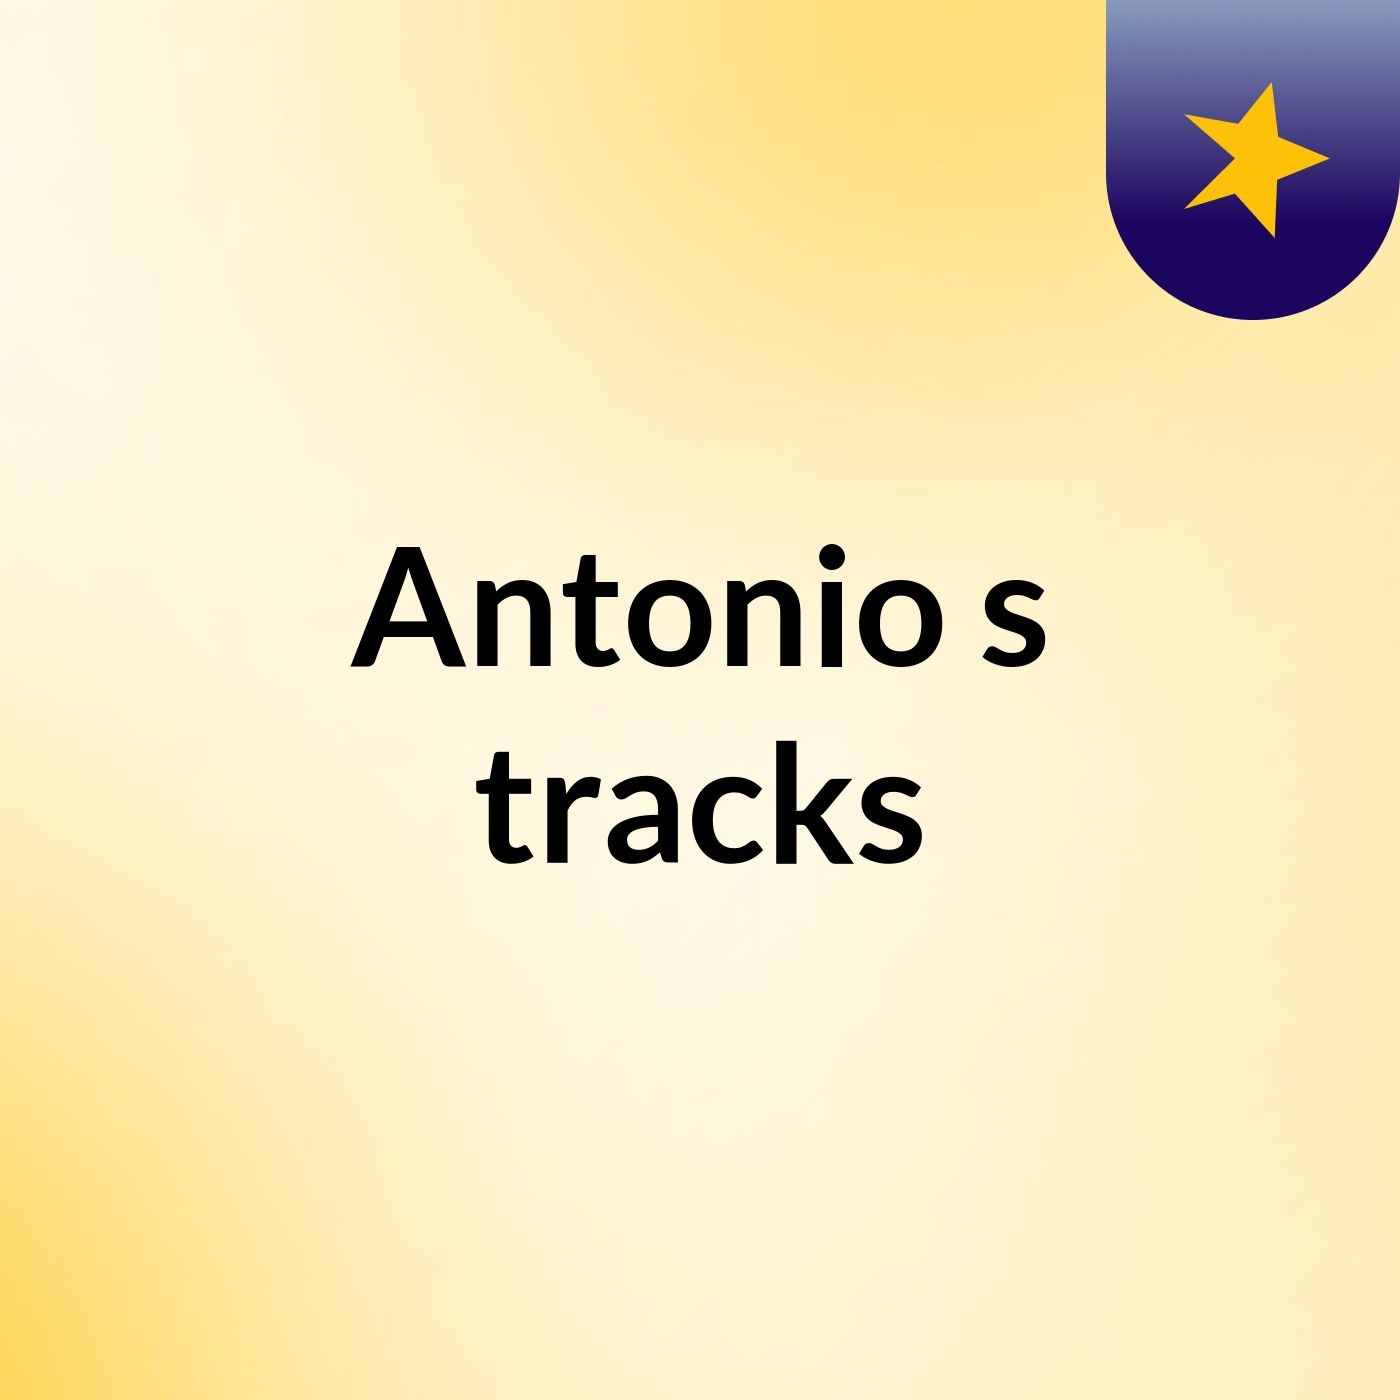 Antonio's tracks